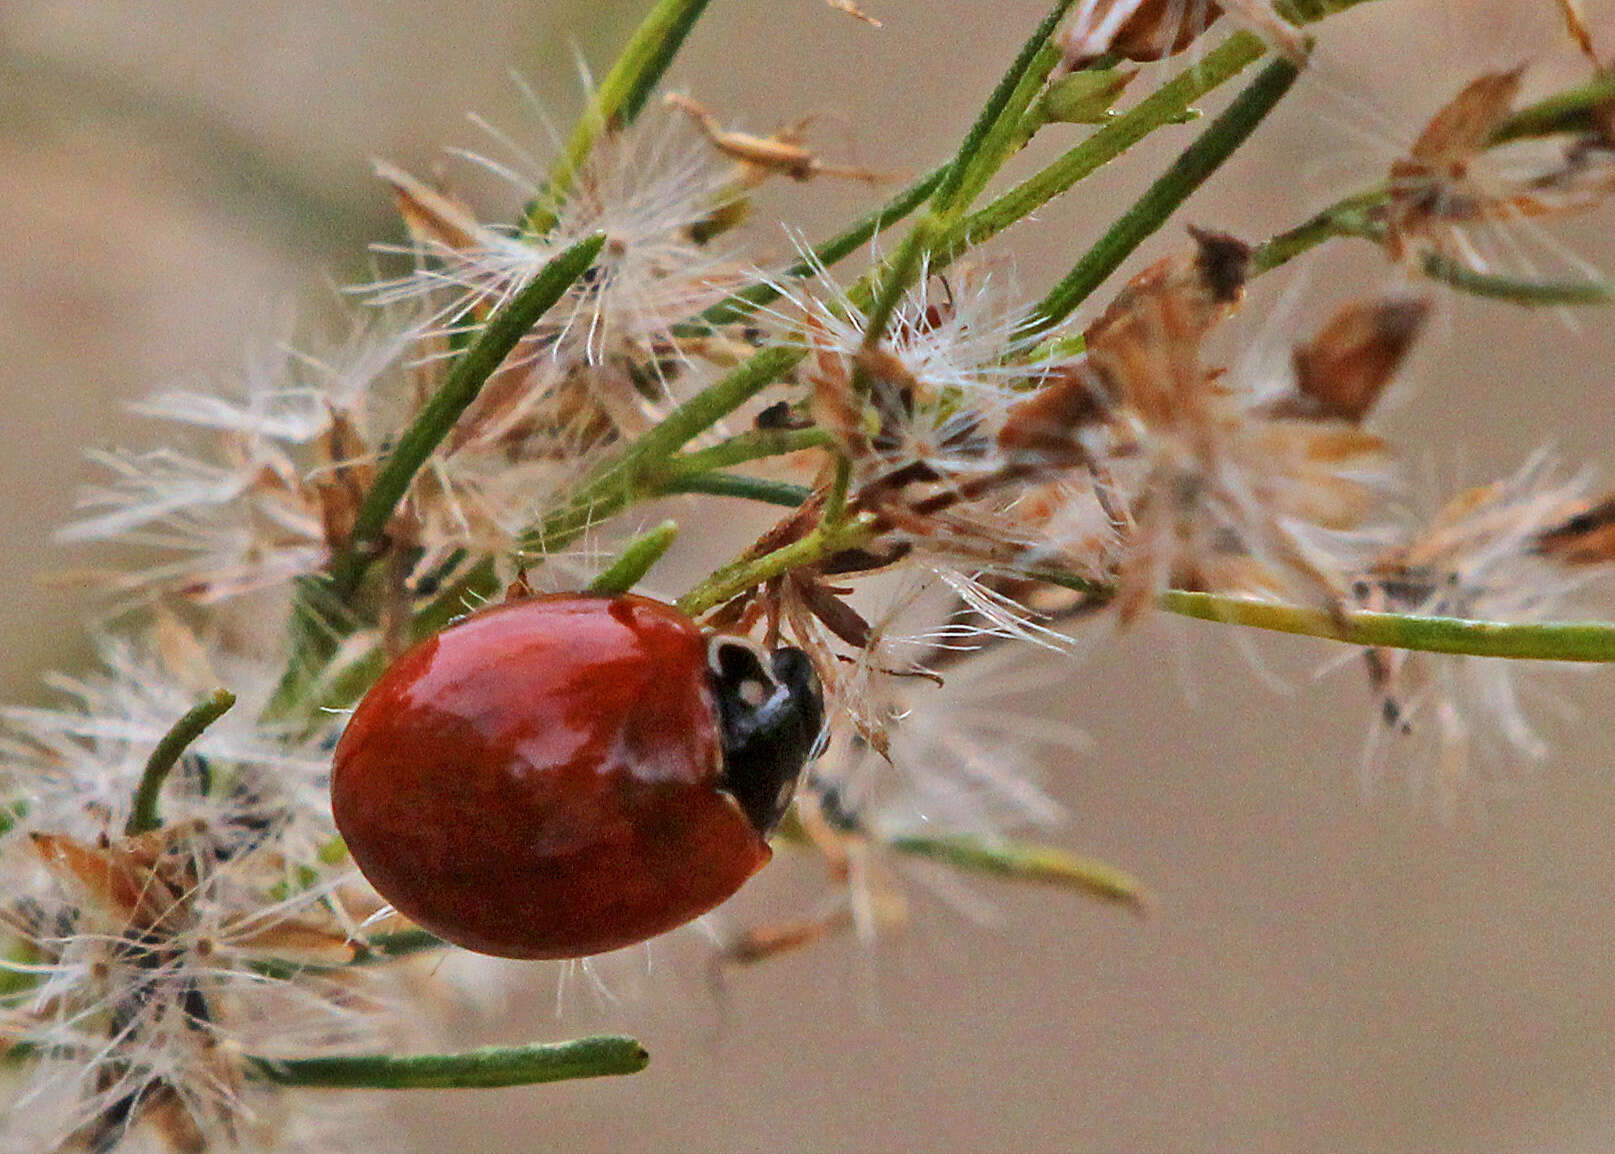 Image of Spotless Lady Beetles